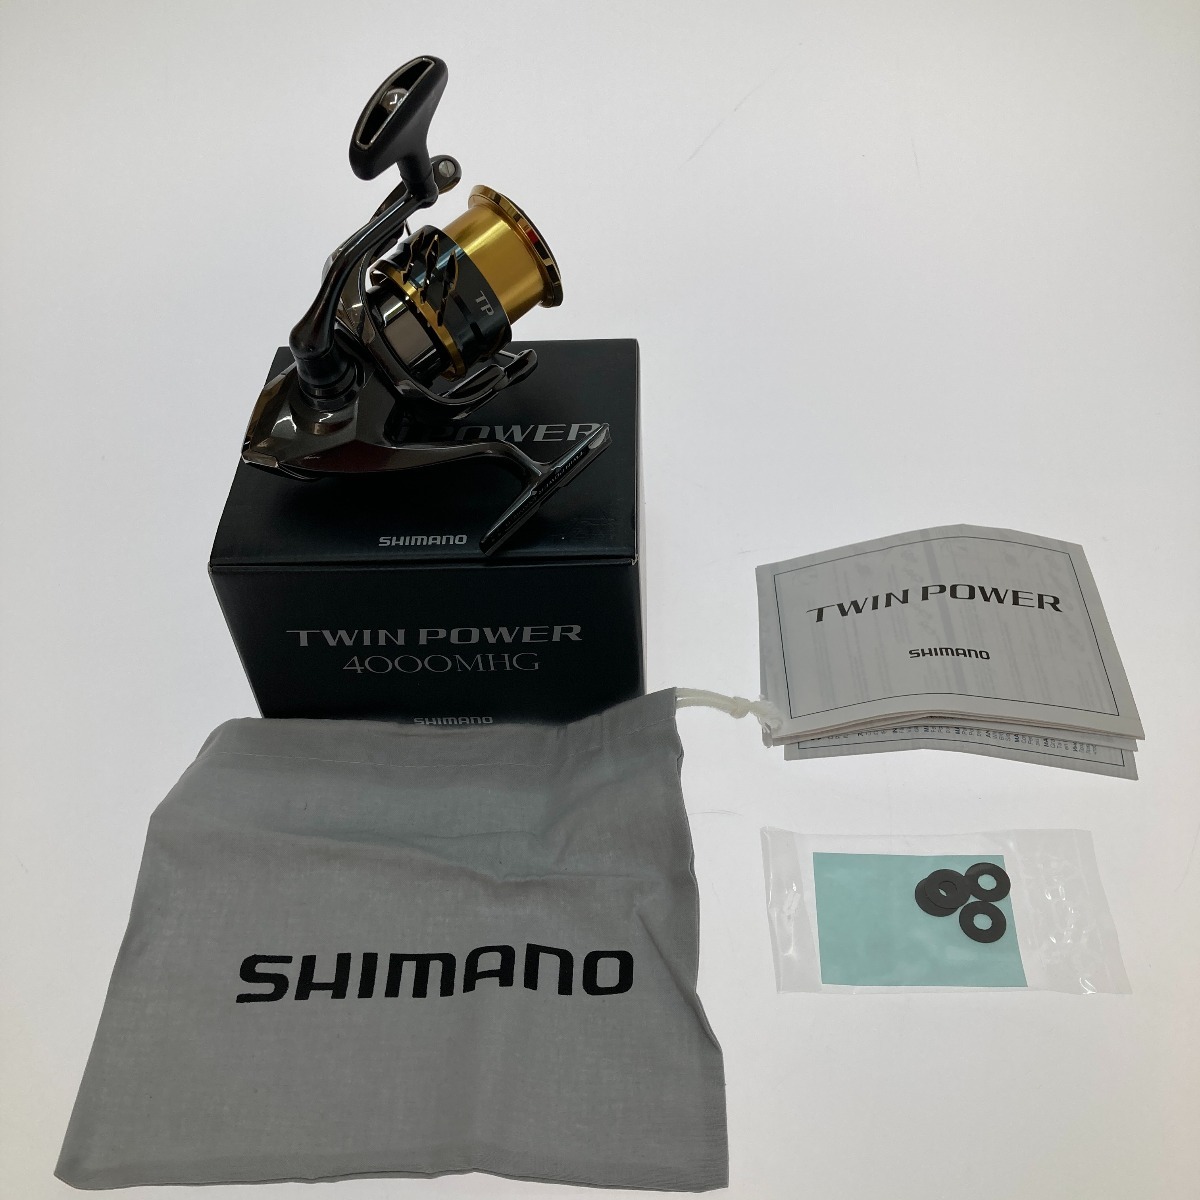 □□ SHIMANO シマノ 20 ツインパワー 4000MHG 04146 やや傷や汚れあり